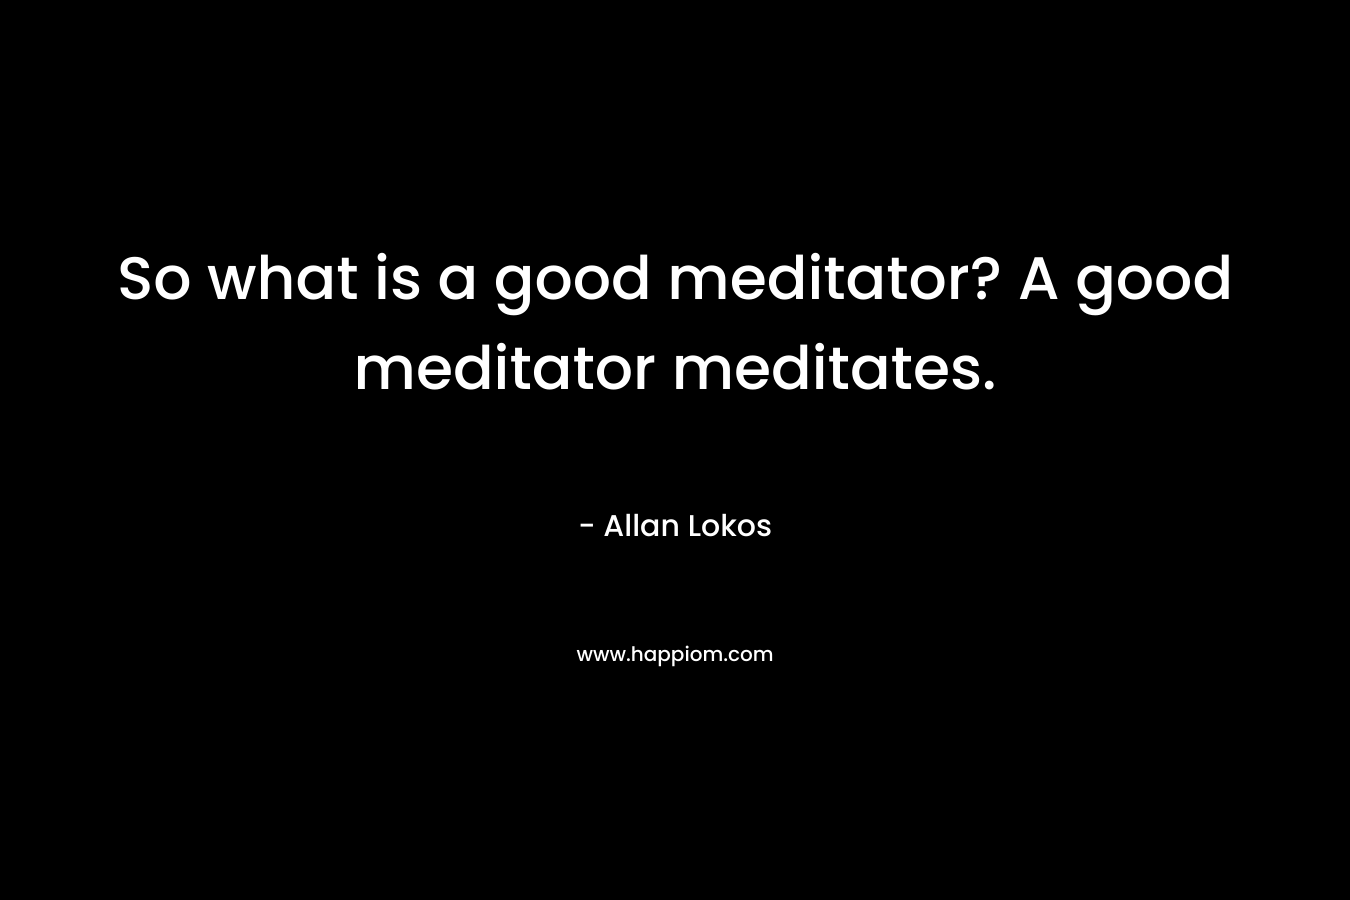 So what is a good meditator? A good meditator meditates. – Allan Lokos